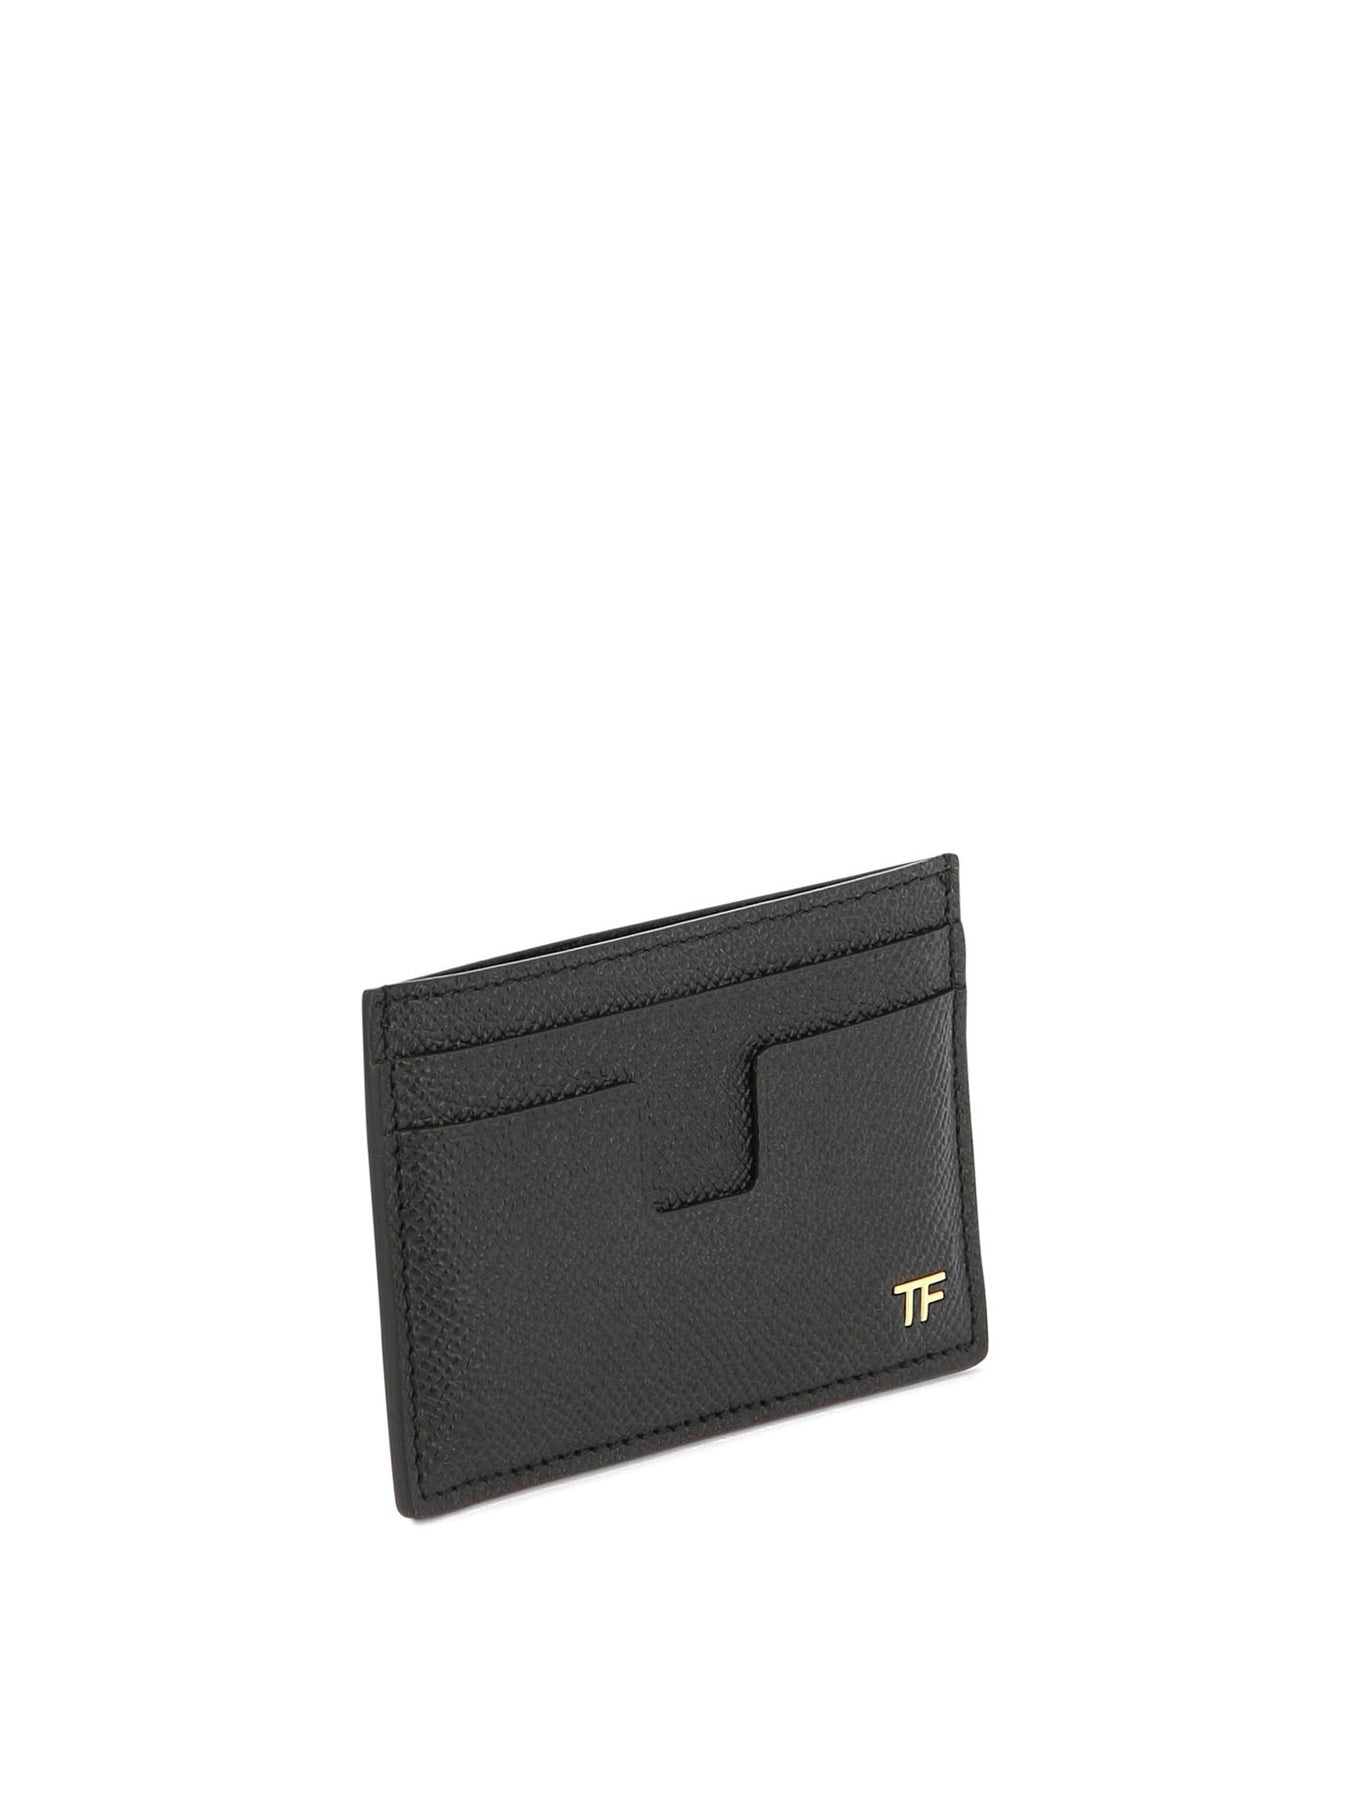 Tf Wallets & Card Holders Black - 2